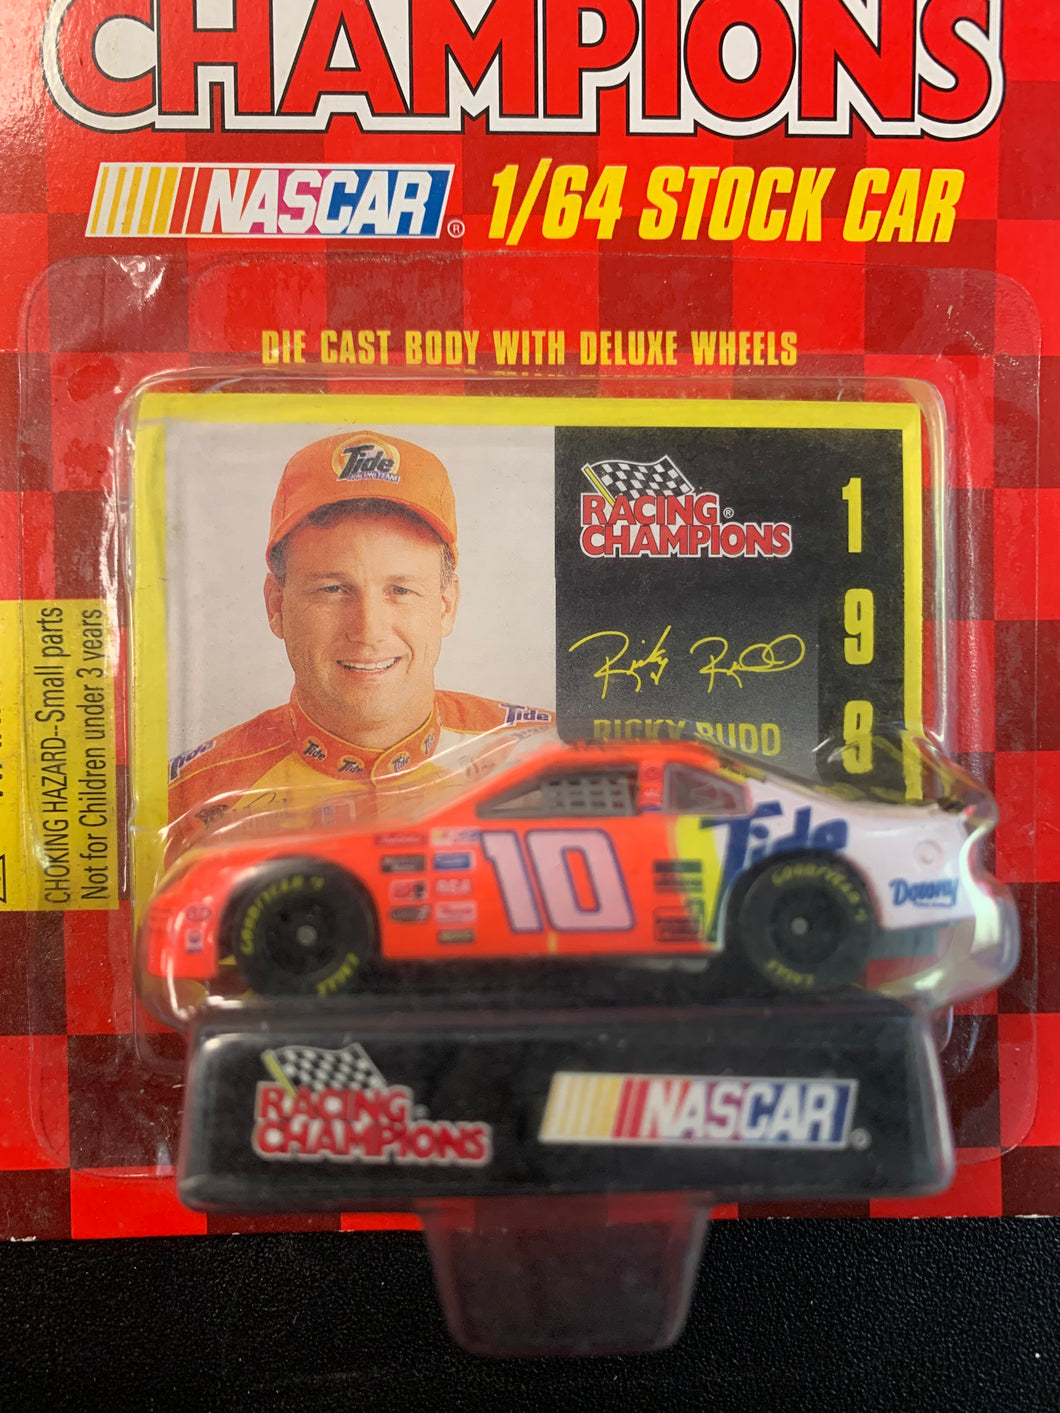 RACING CHAMPIONS NASCAR 1/64 STOCK CAR 1996 RICKY RUDD #10 TIDE CARD DAMAGE